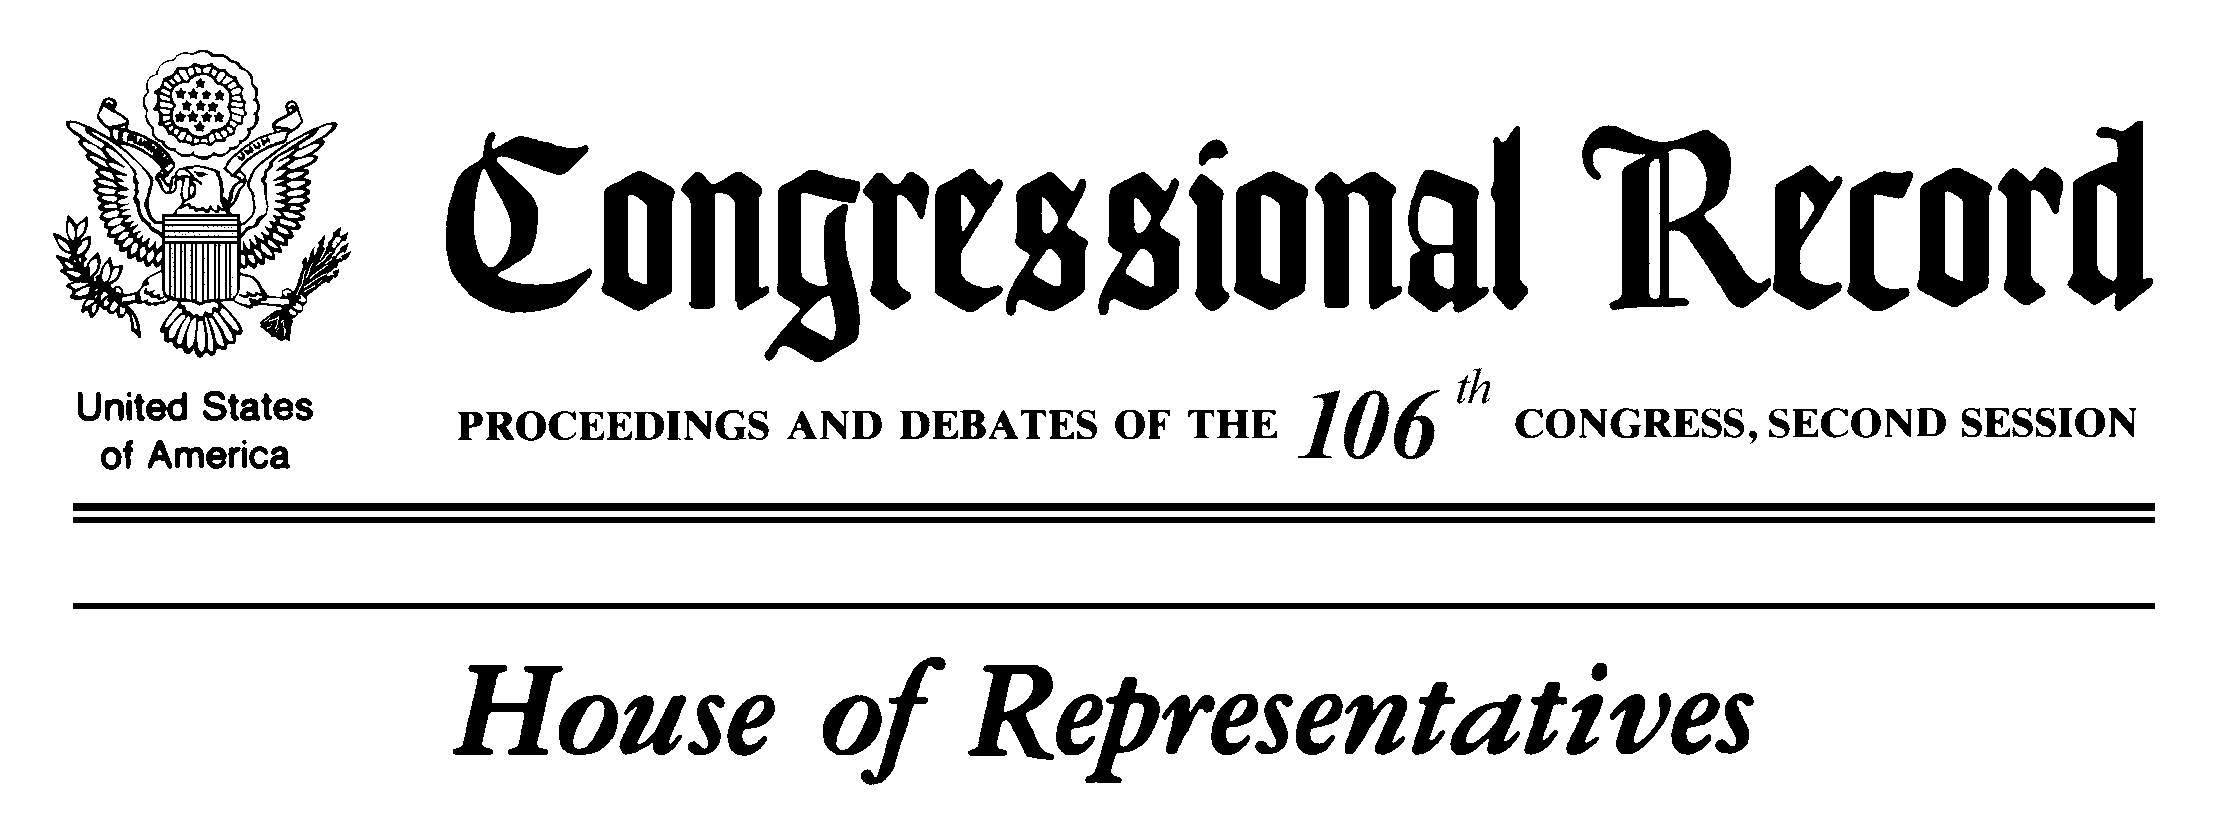 Congressional Record: 106th Congress